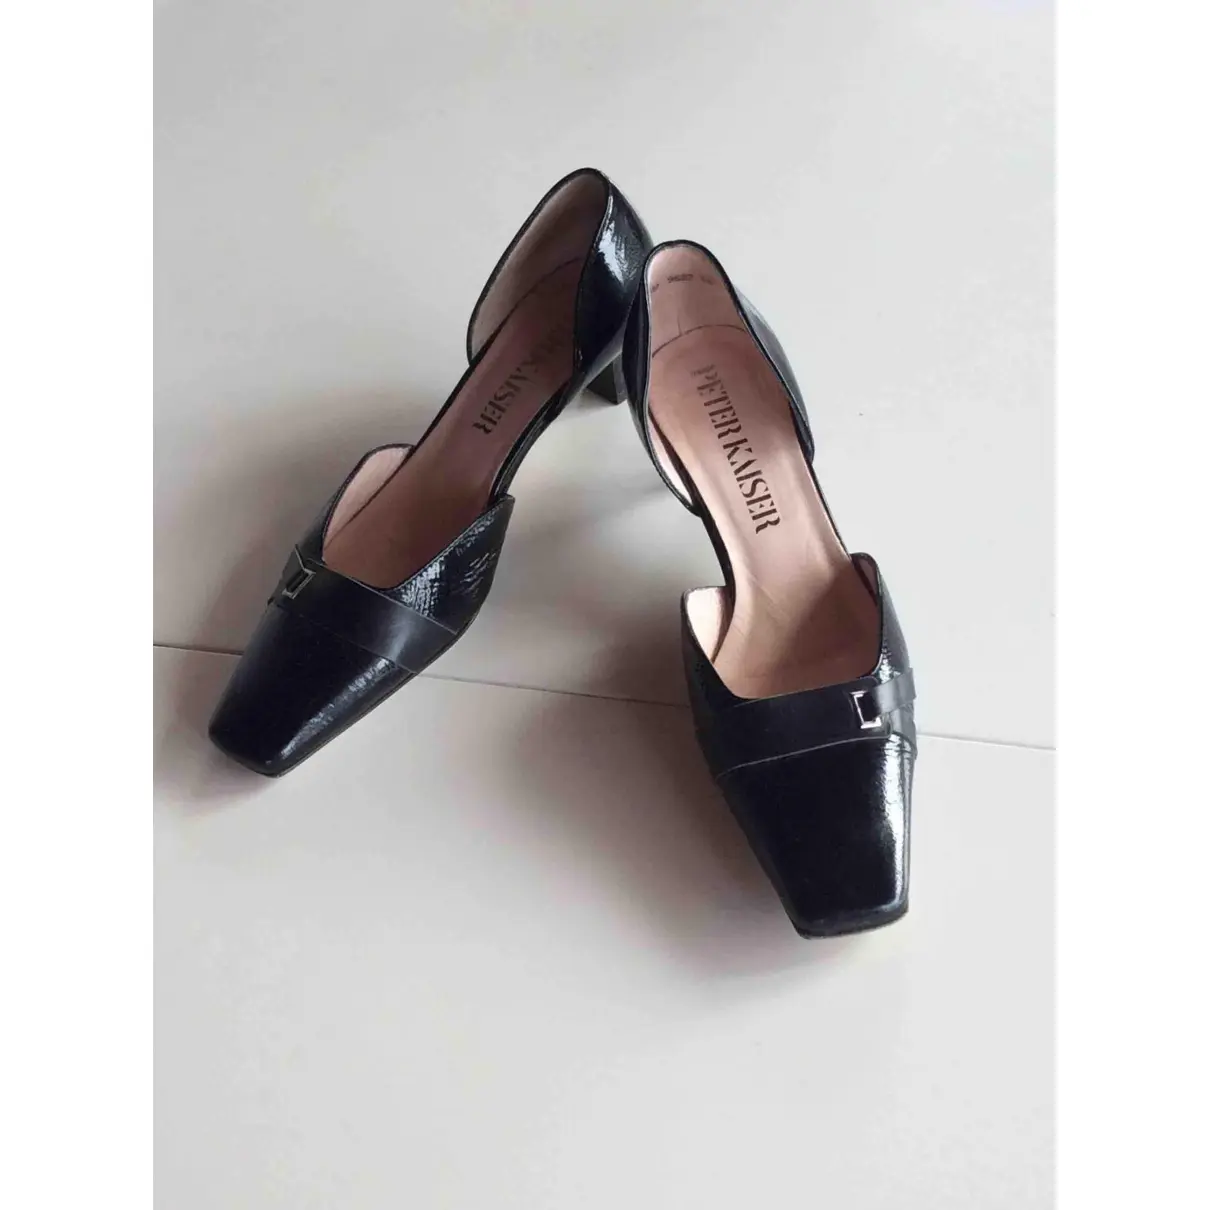 Buy PETER KAISER Patent leather heels online